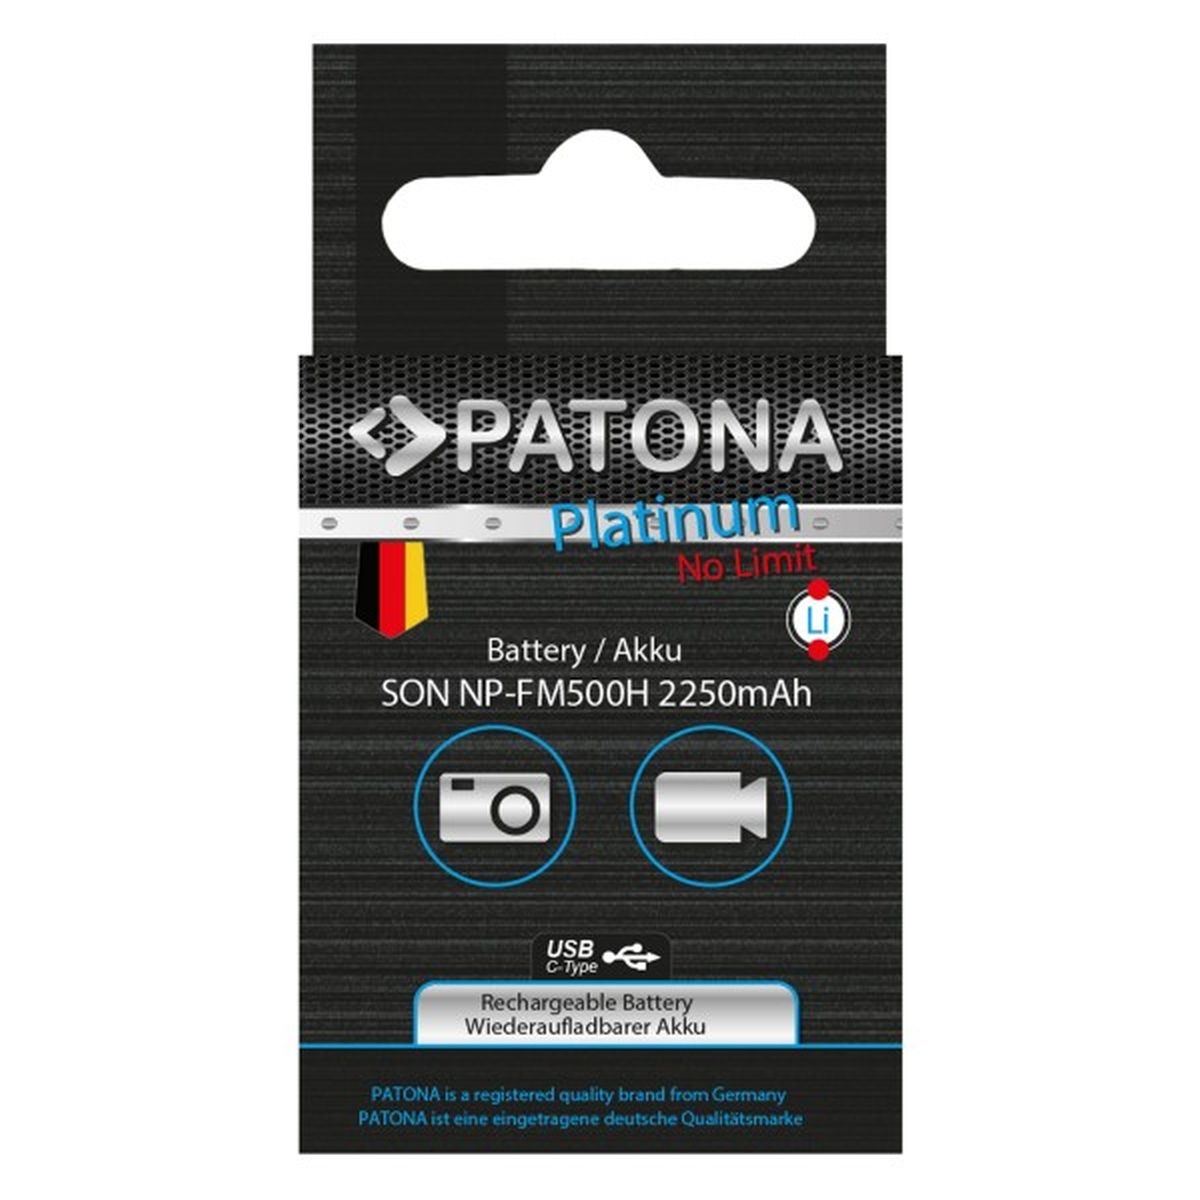 Patona Platinum Akku mit USB-C Input für Sony NP-FM500H